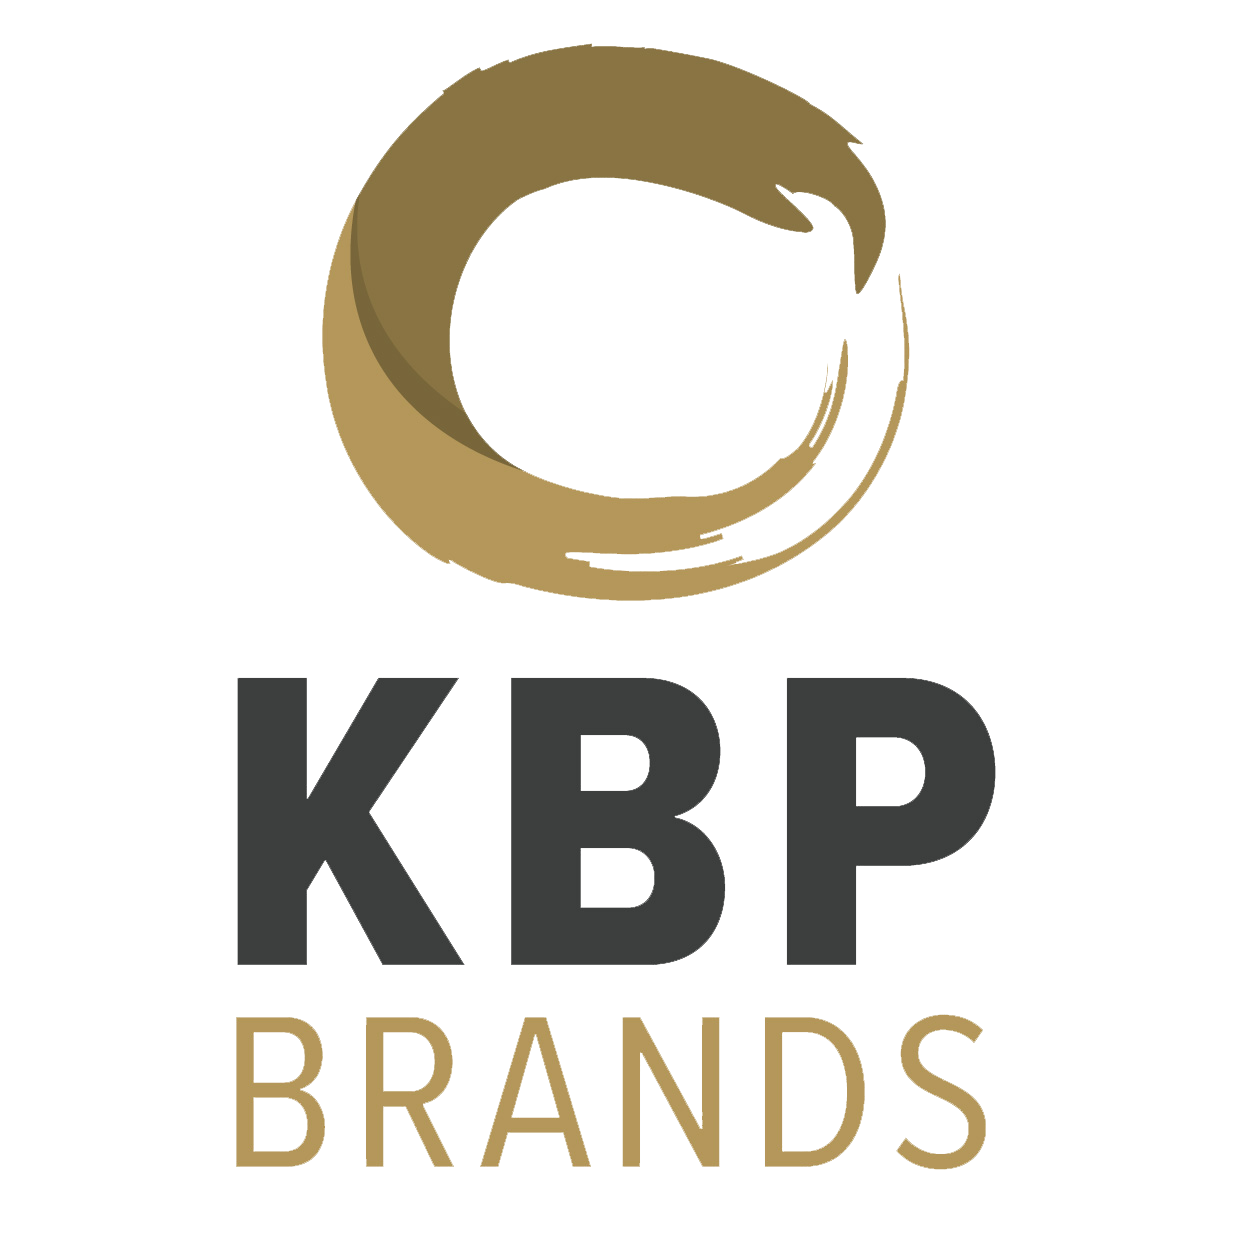 KBP Brands Logo